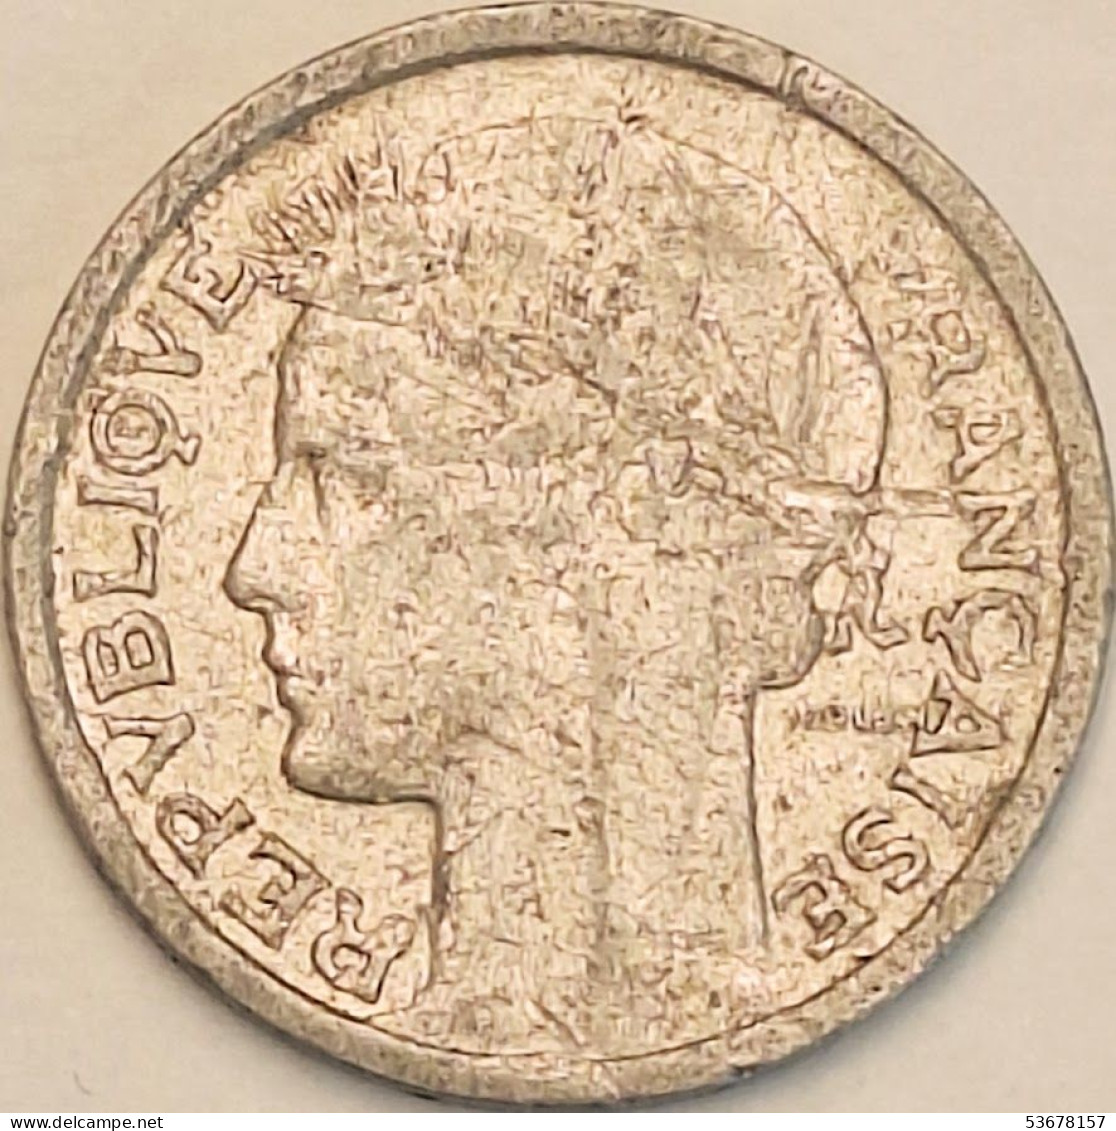 France - Franc 1948 B, KM# 885a.2 (#4095) - 1 Franc